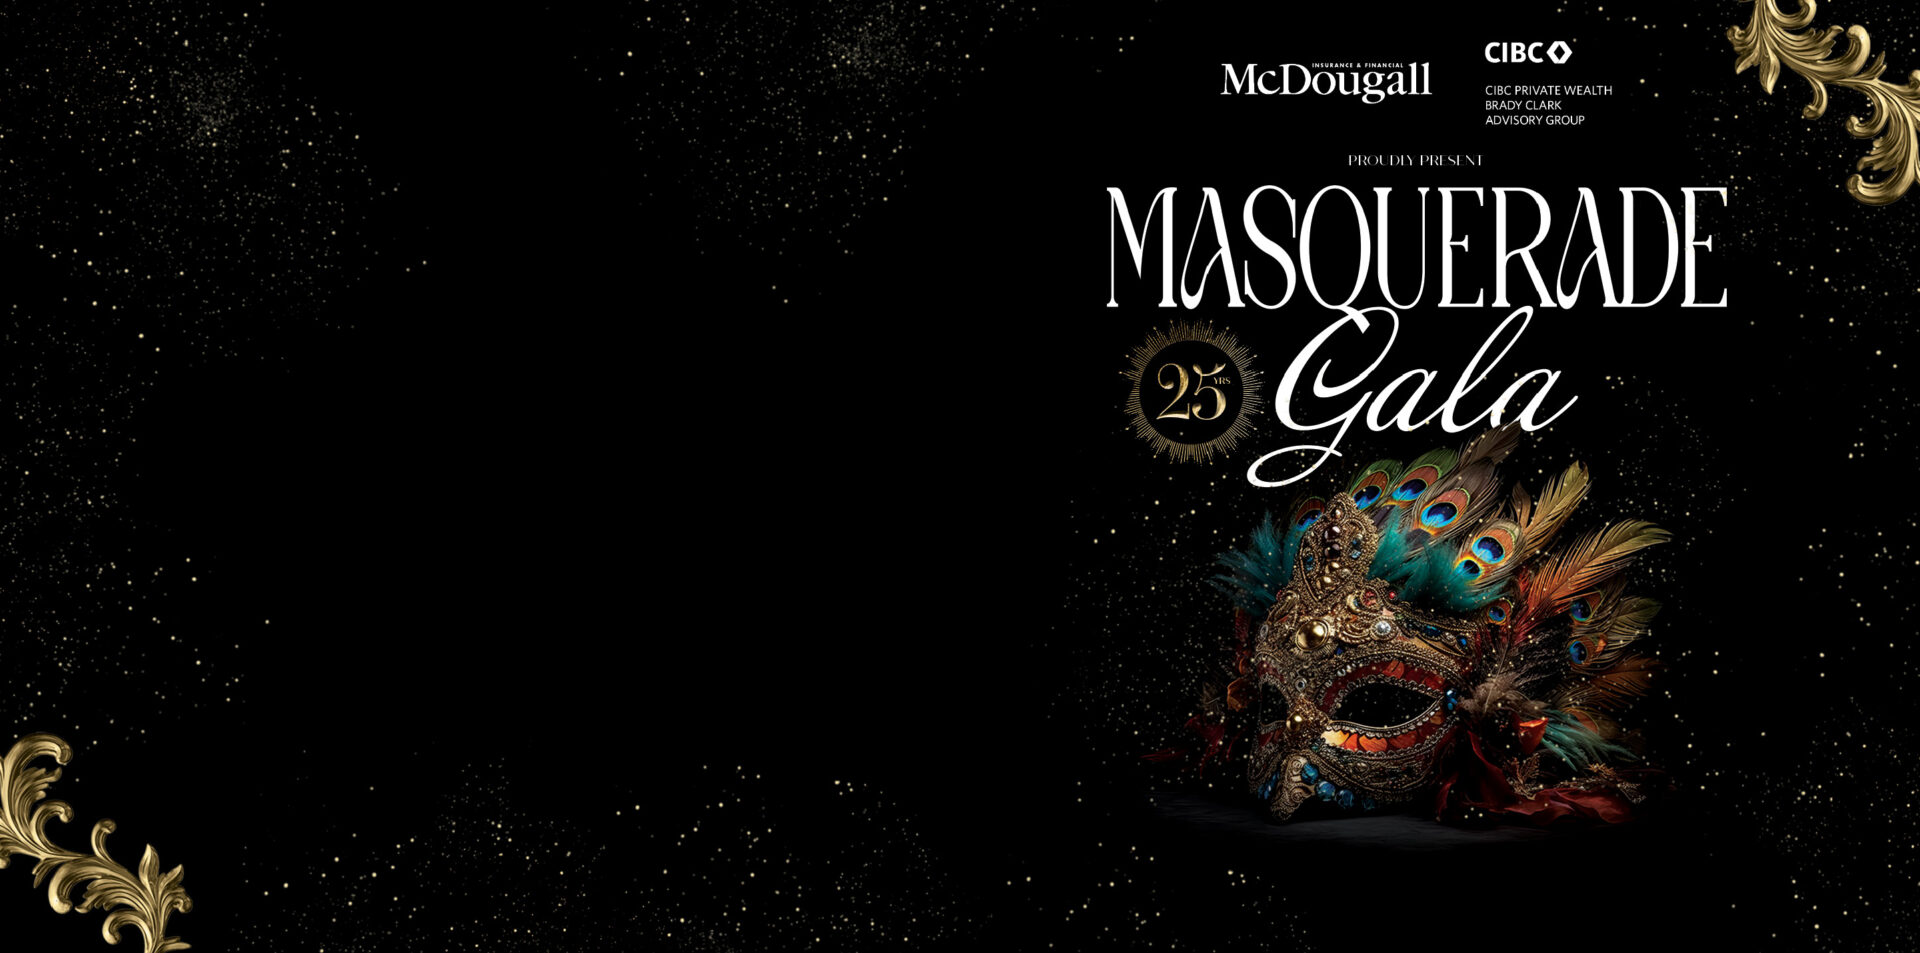 Our 25th Anniversary Masquerade Gala